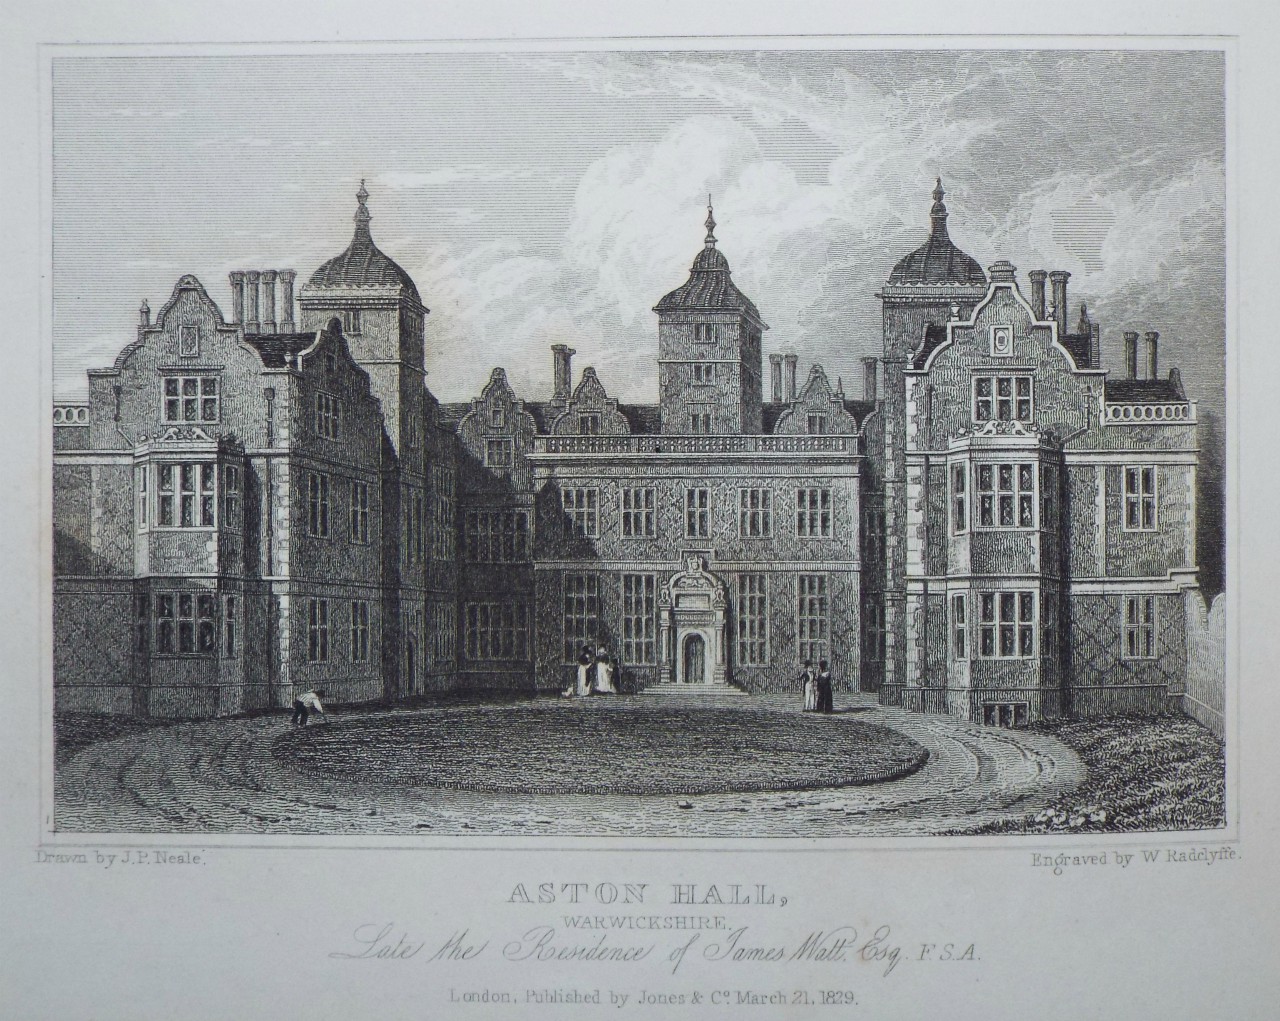 Print - Aston Hall, Warwickshire. Late the Residence of James Watt, Esq. F.S.A. - Radclyffe